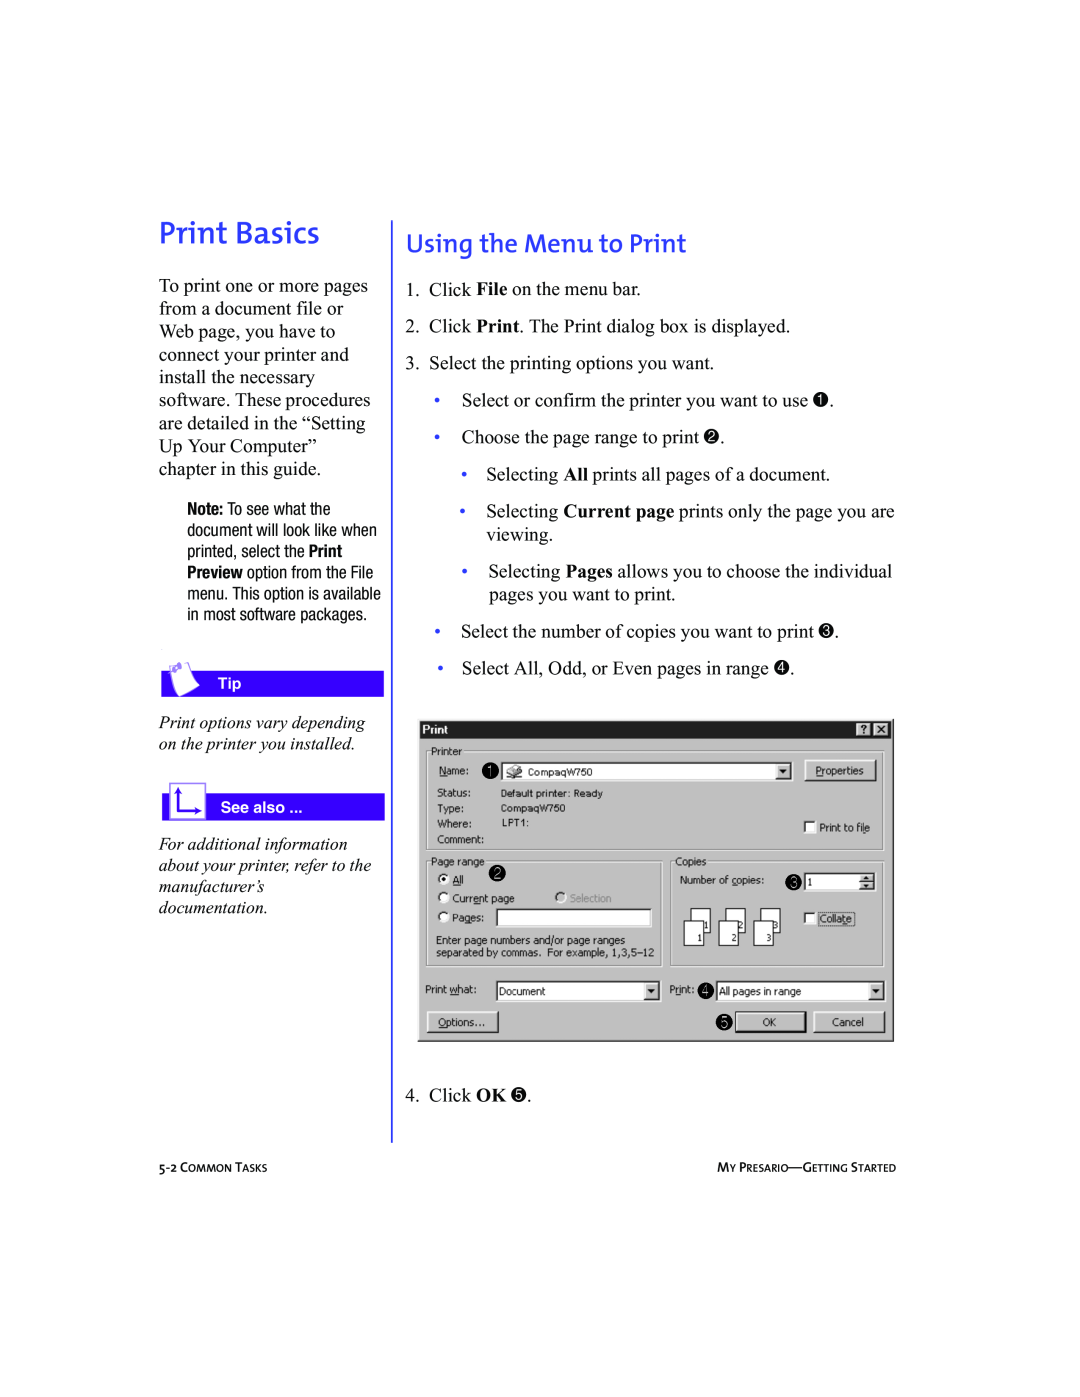 Compaq 5BW474 manual Print Basics, Using the Menu to Print 